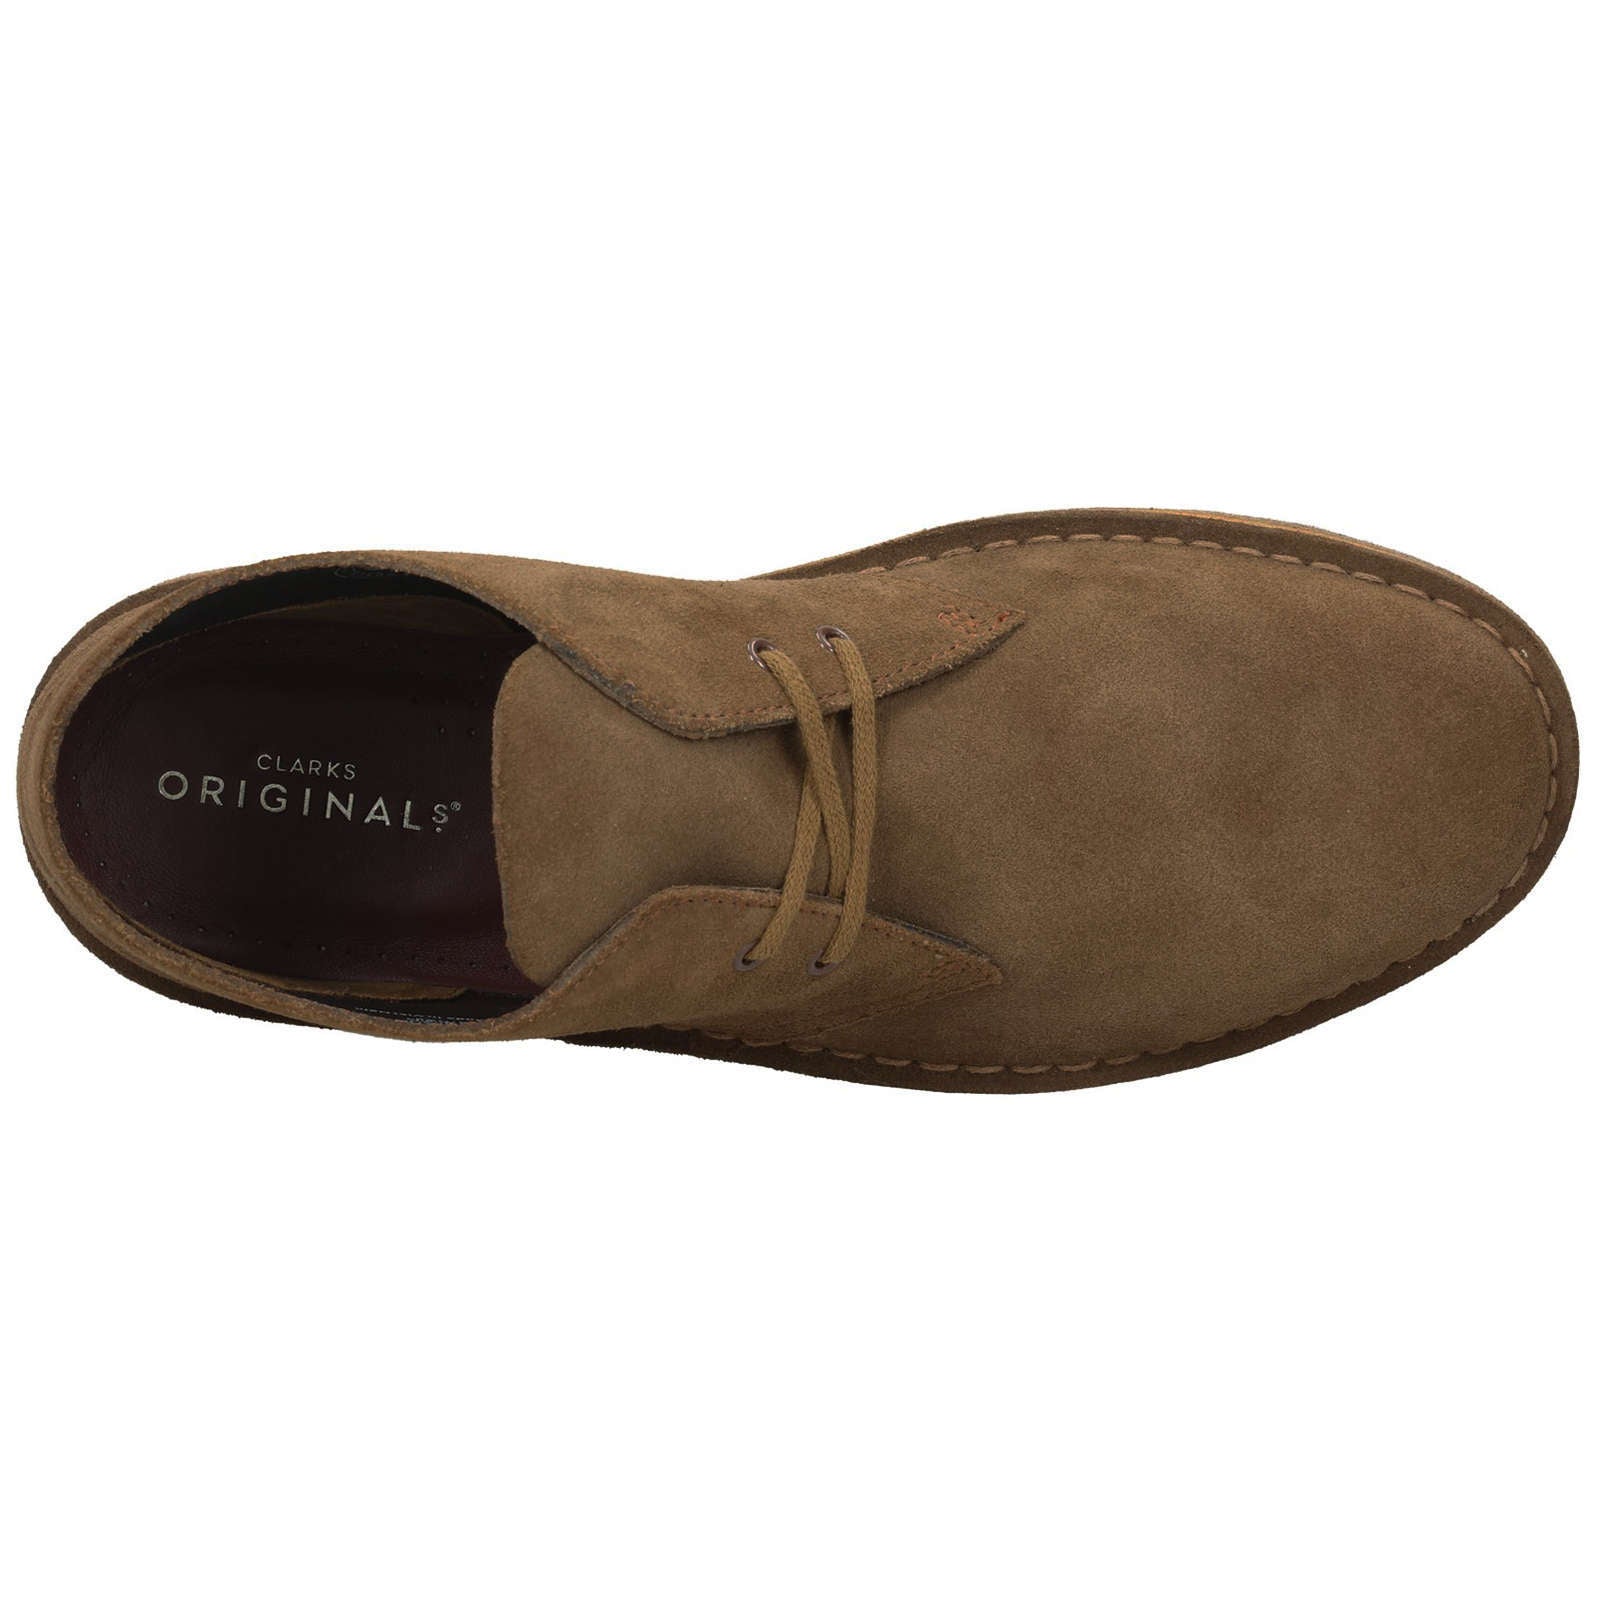 Clarks Originals Desert Boot Suede Leather Men's Boots#color_cola brown